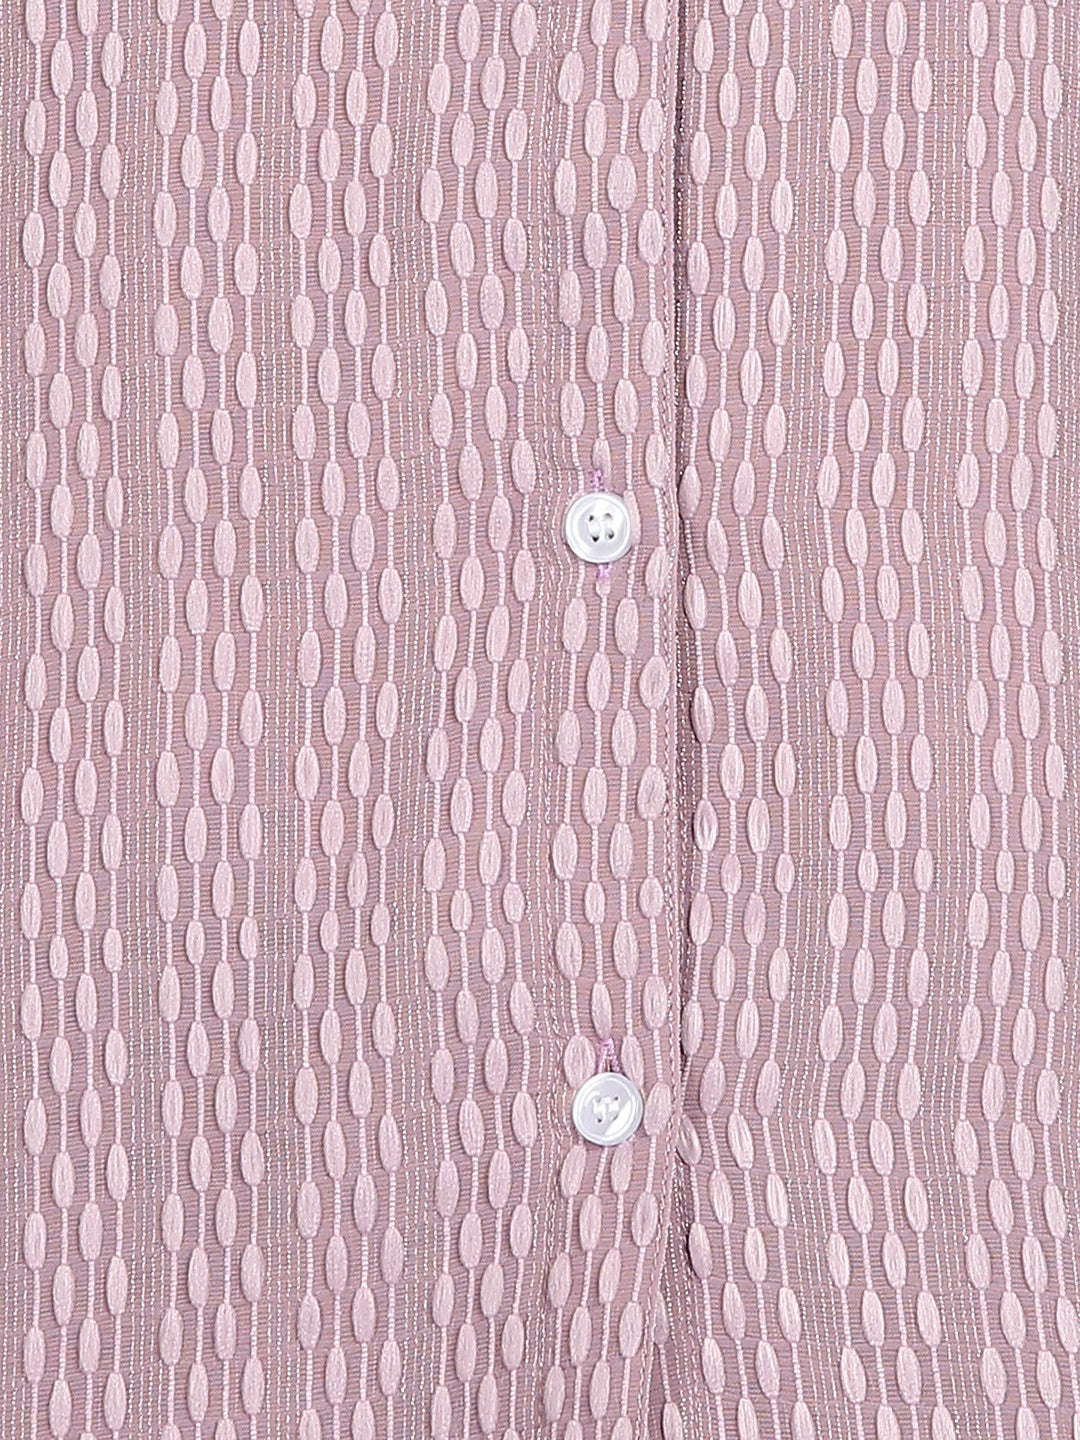 Lavender Georgette Fabric Shirt